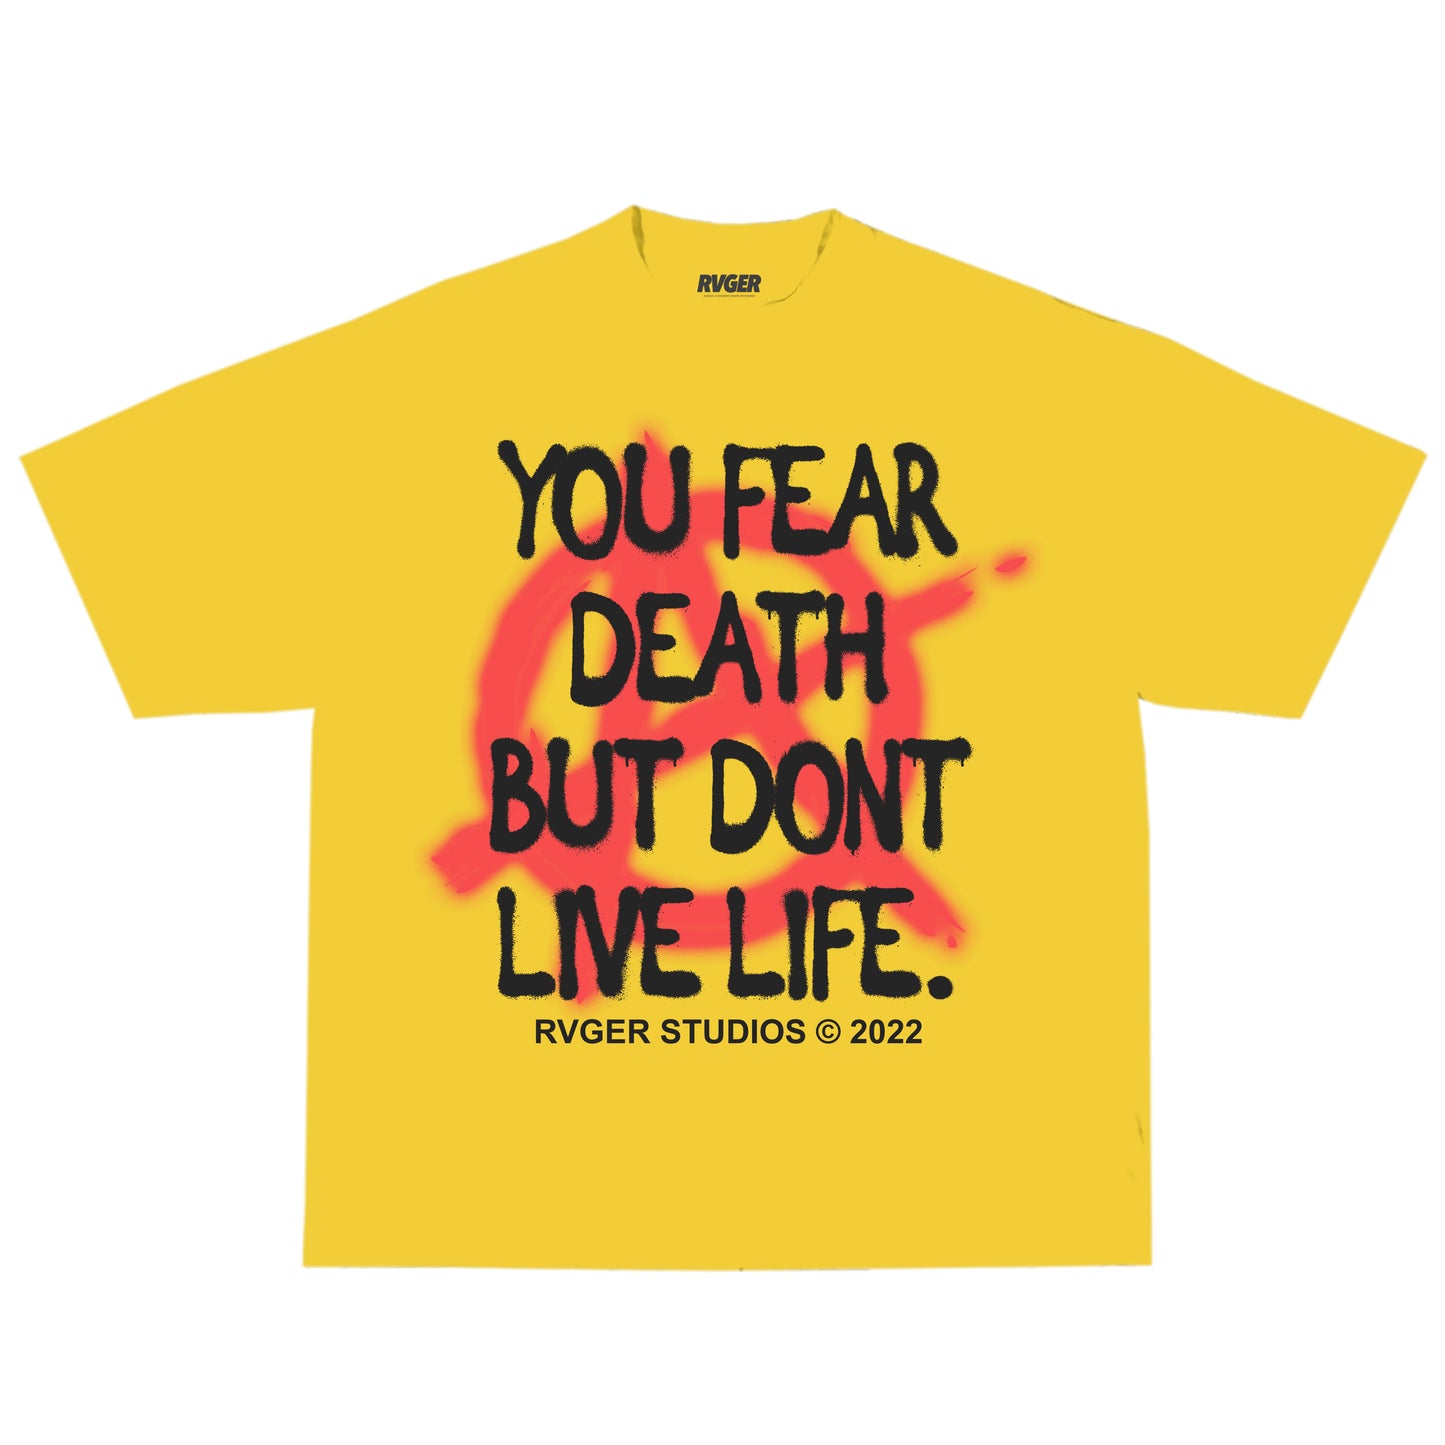 YOU FEAR DEATH BUT DONT LIVE LIFE #YFDBDLL Tee